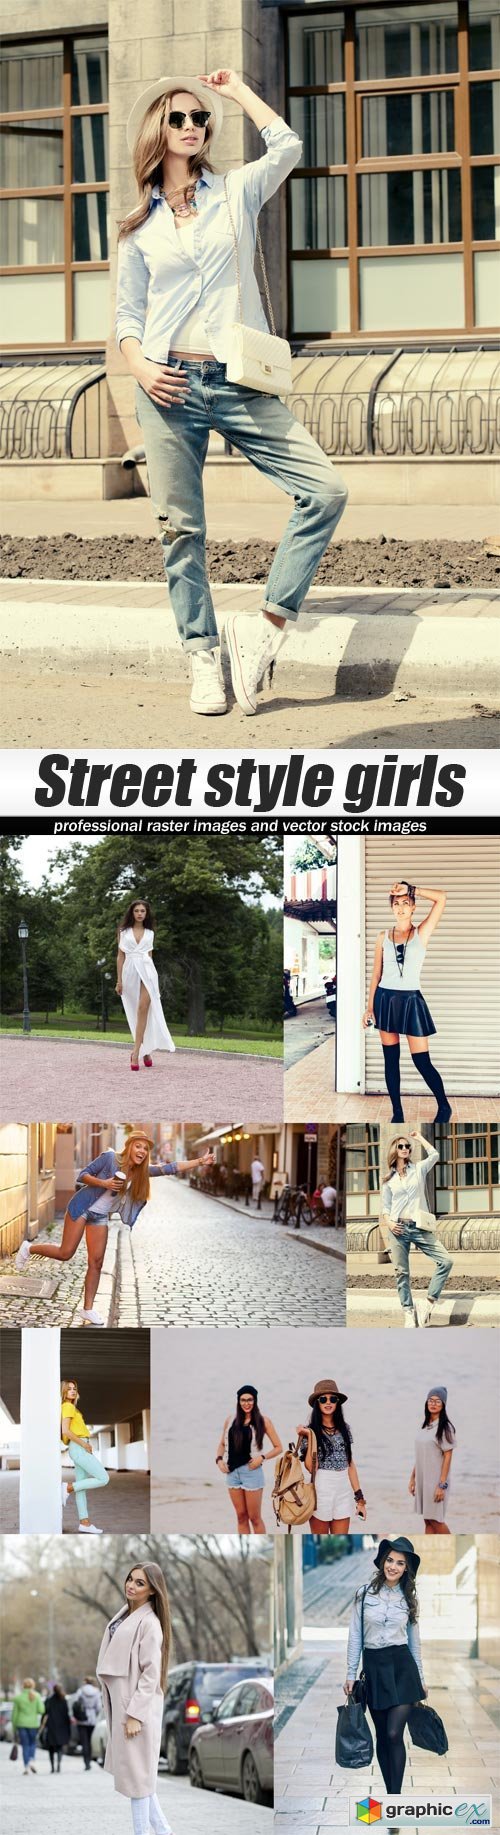 Street style girls